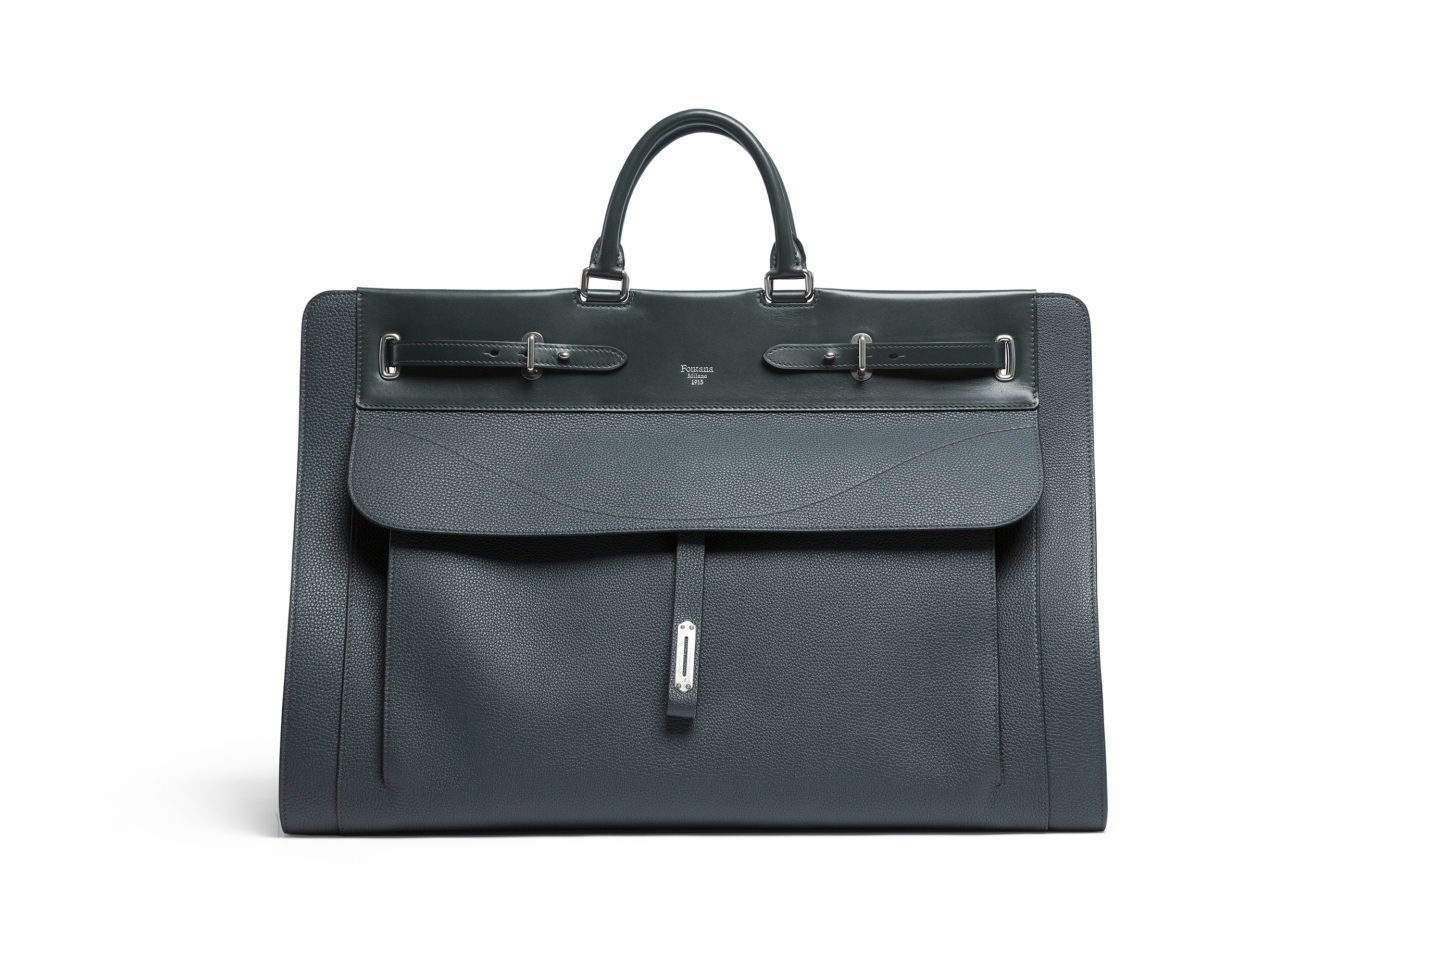 Fontana, bag, styling, leather, still life, teal, hand bag